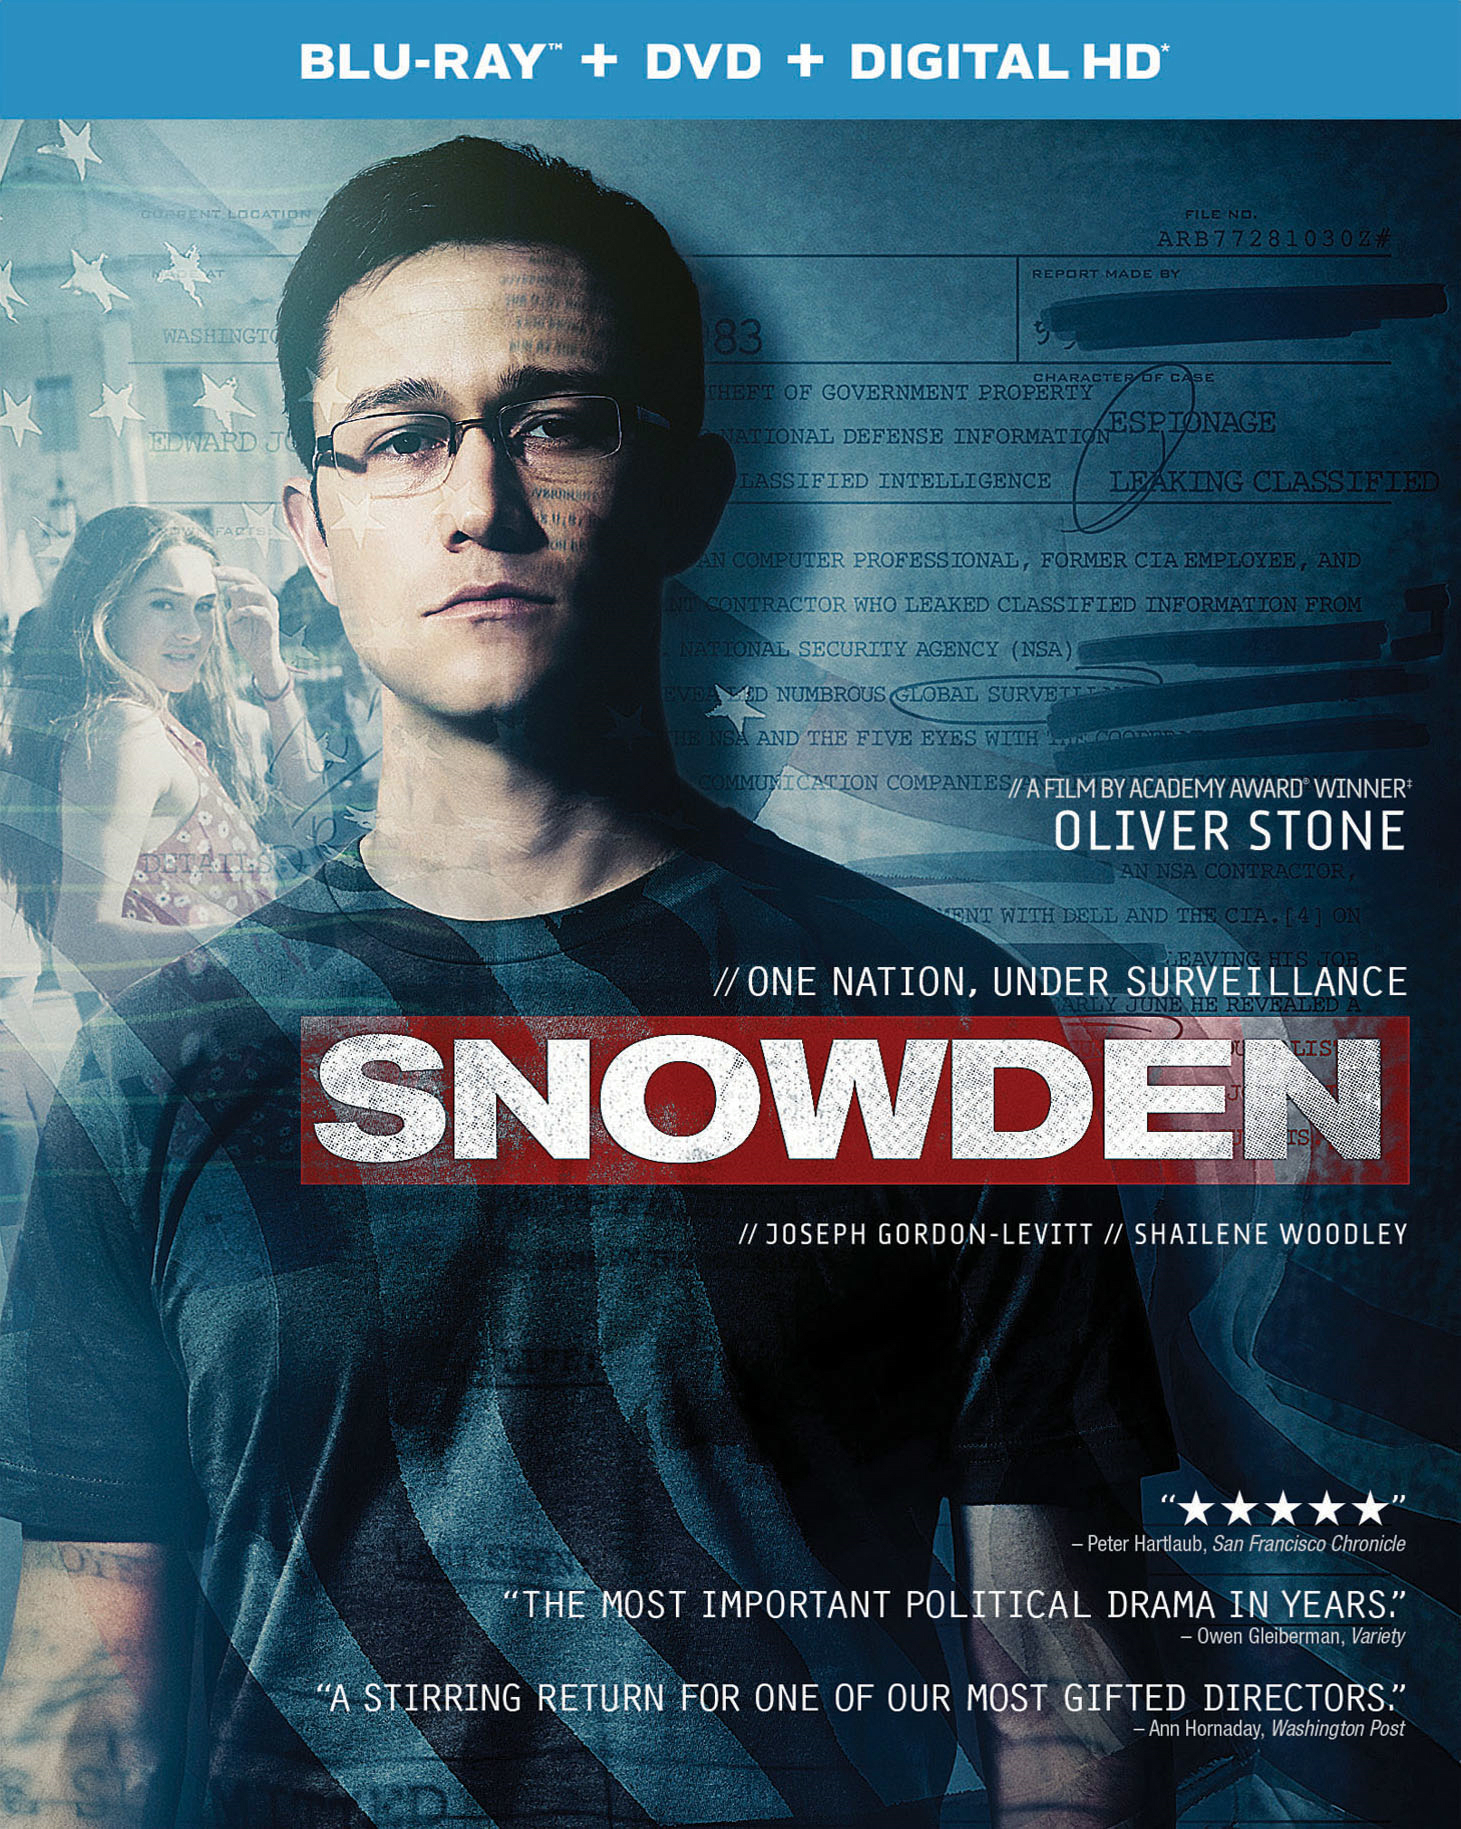 Snowden (DVD + Digital) - Blu-ray [ 2016 ]  - Thriller Movies On Blu-ray - Movies On GRUV